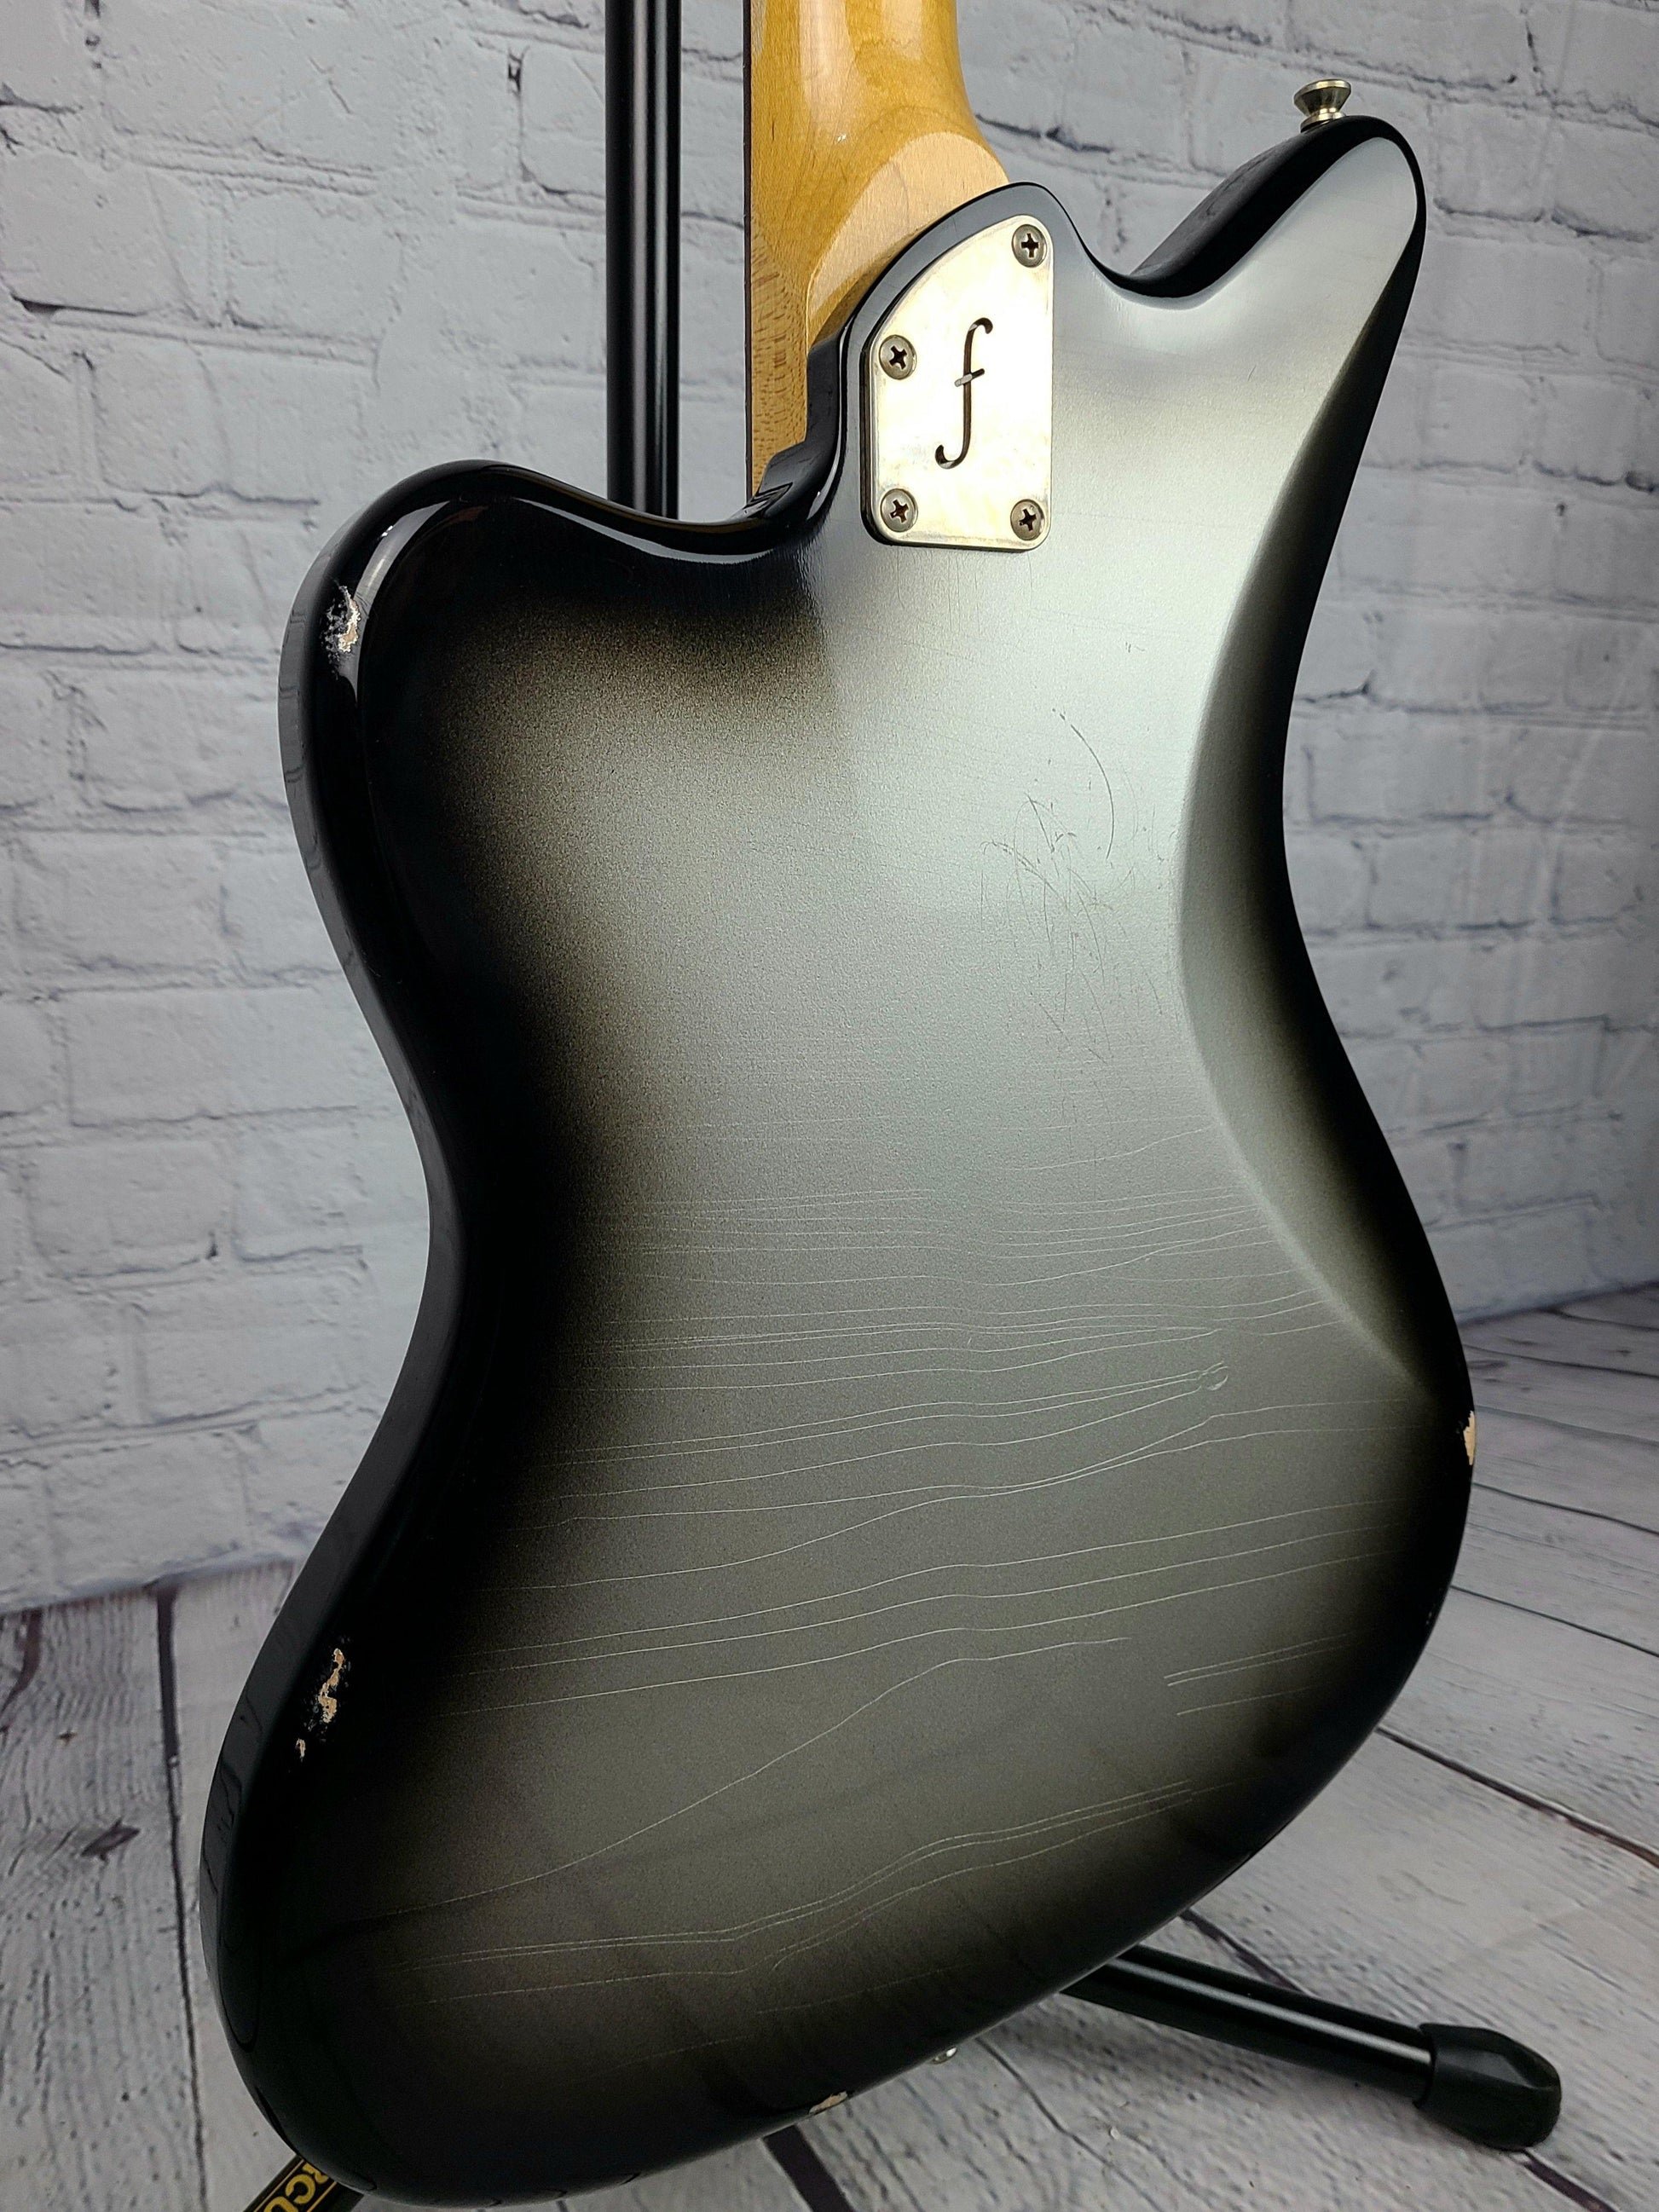 Fano JM6 Oltre Silverburst Electric Guitar Rosewood Board USA Lollar Imperial Pickups - Guitar Brando